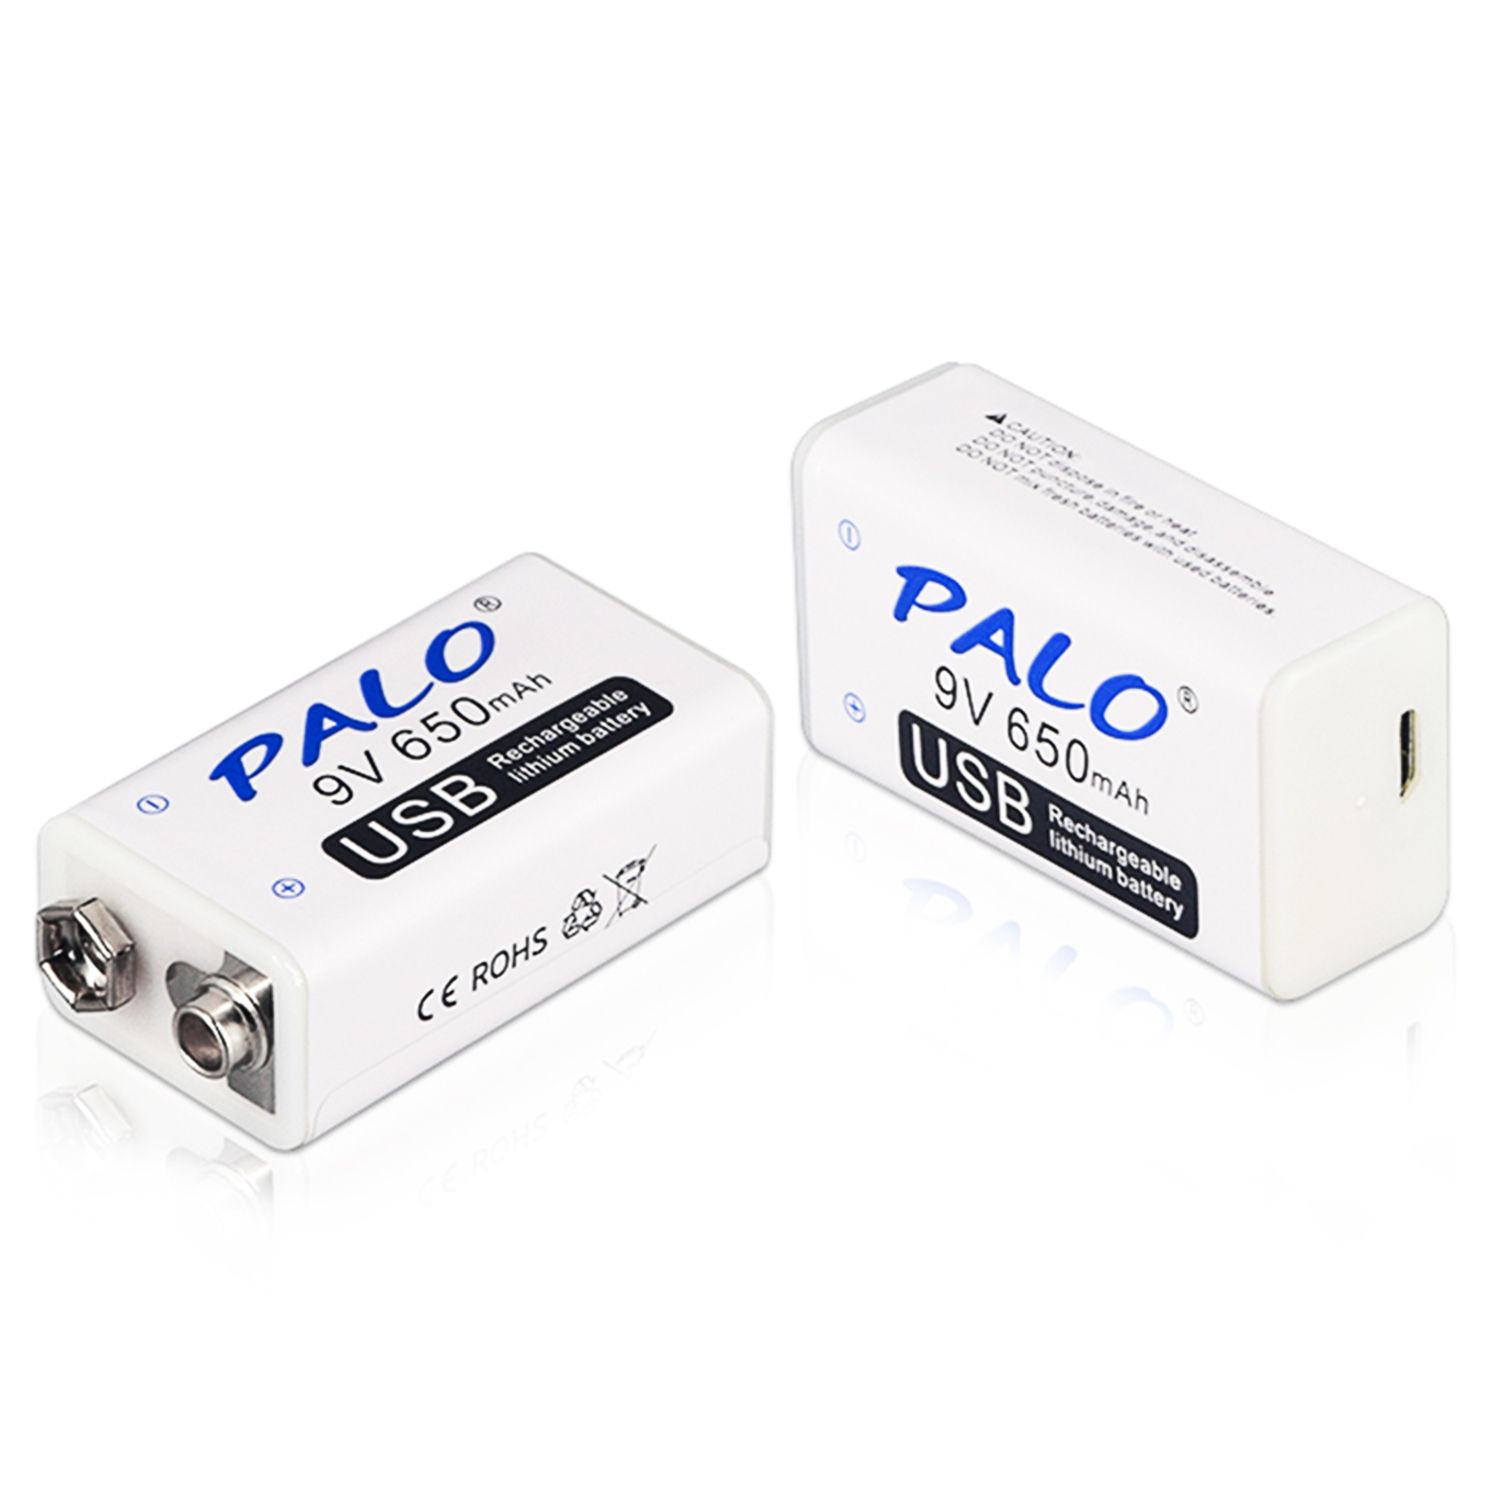 Литиевая батарейка (крона) PALO micro USB 9V 650mAh